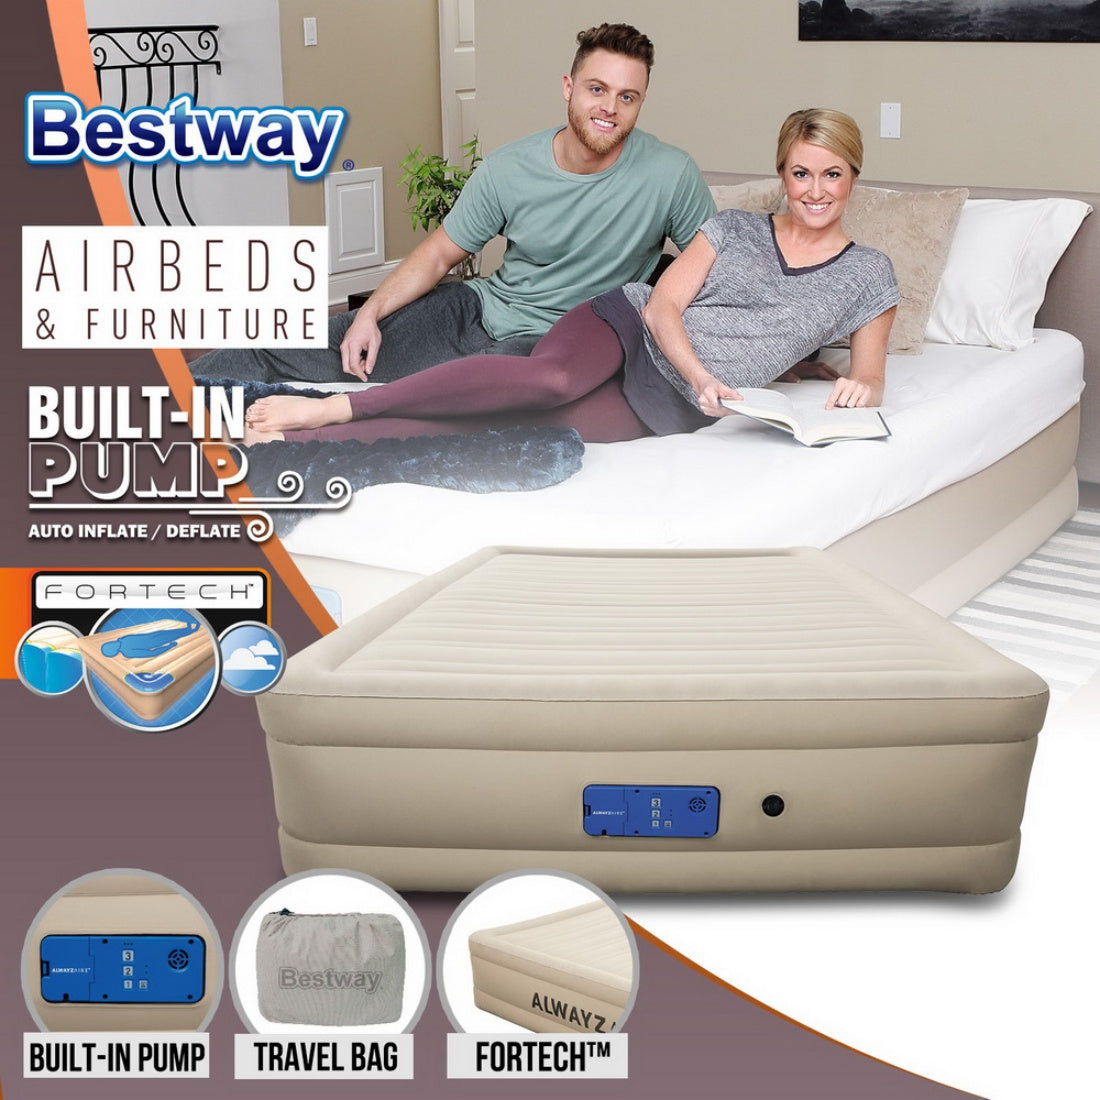 Bestway Air Bed Inflatable Luxury Queen Blow Up Mattress Built-in Pump Travel